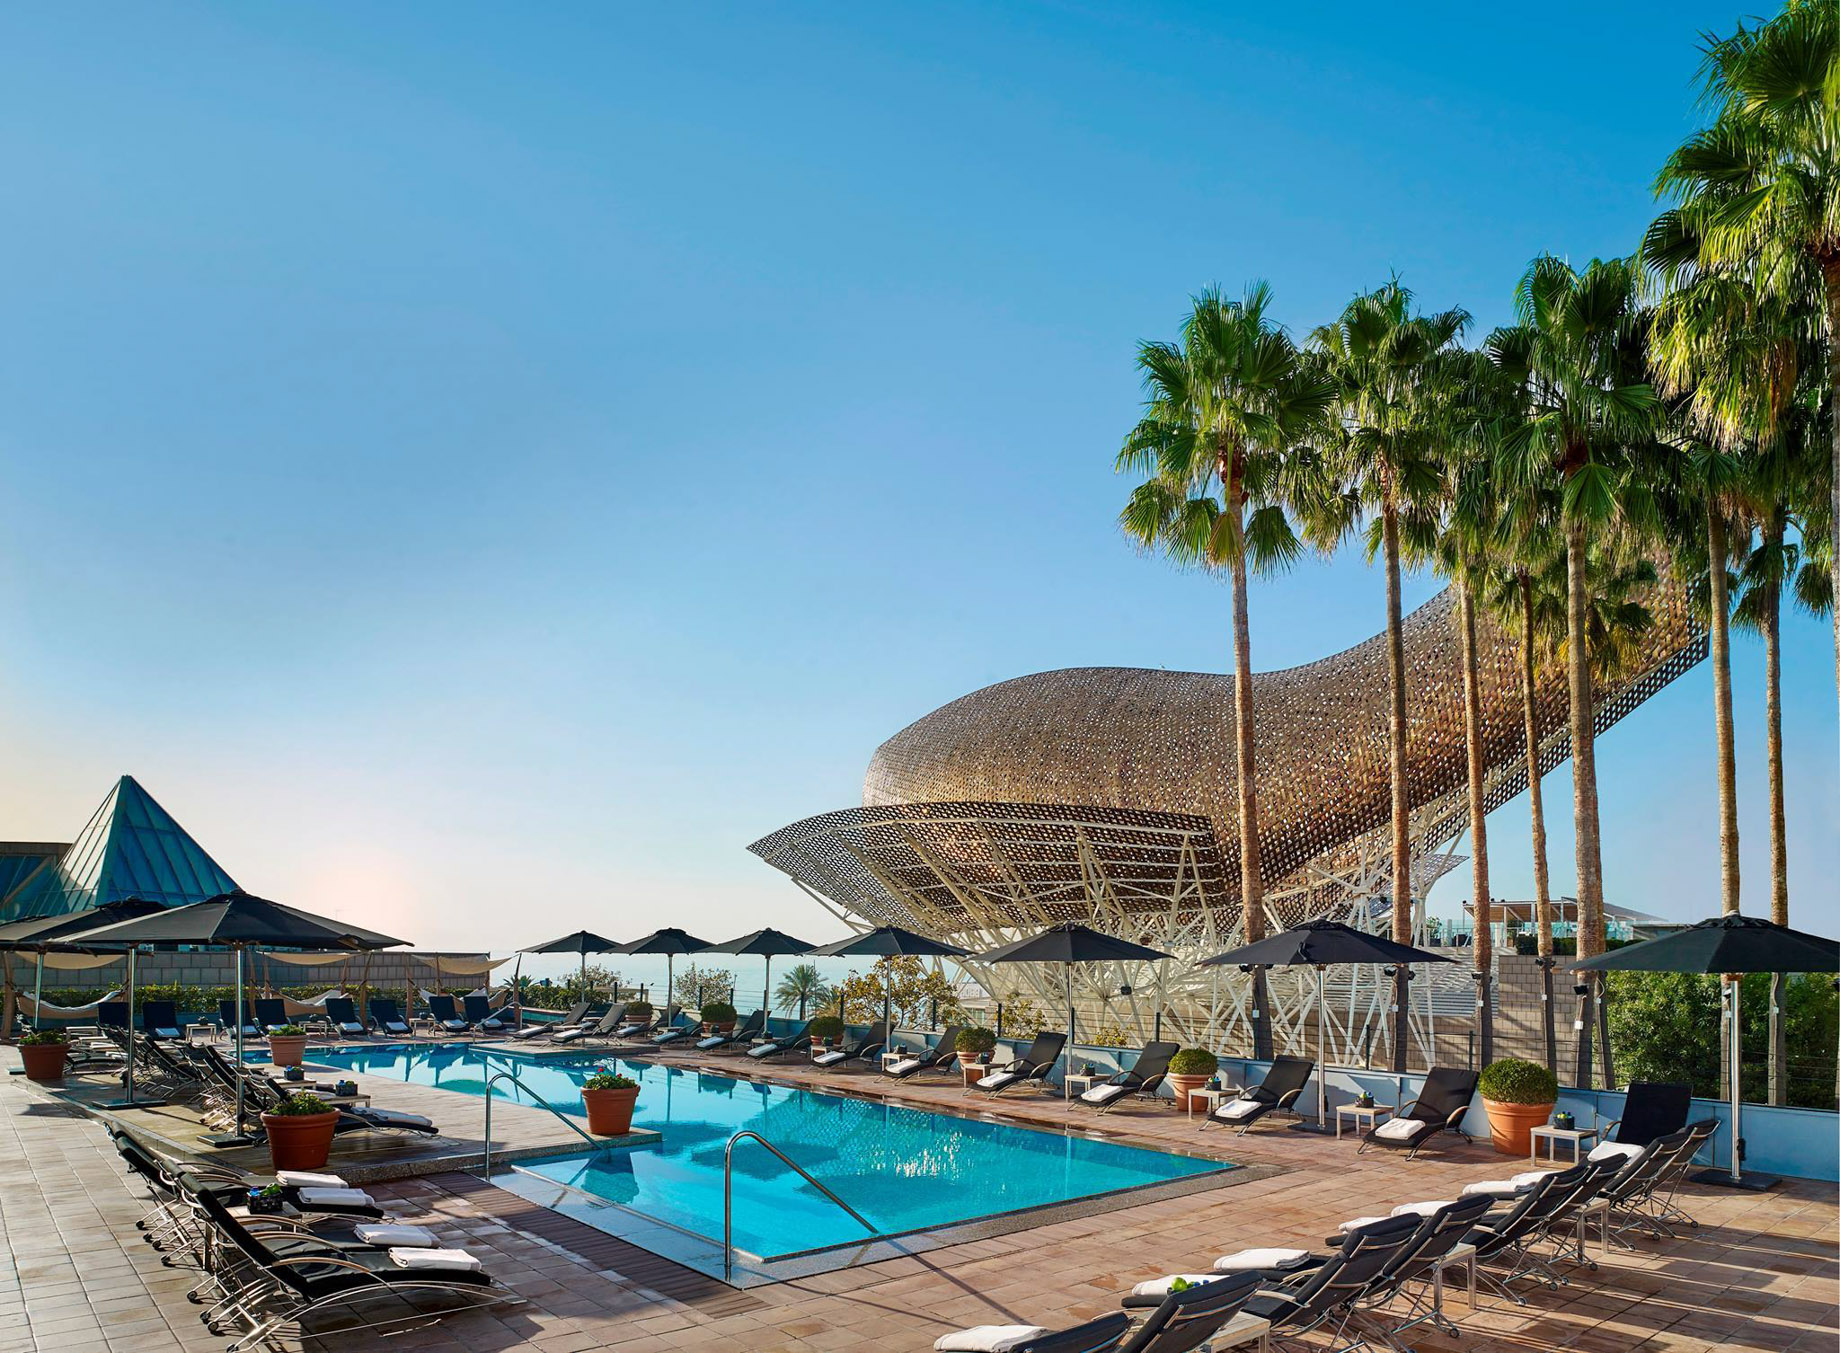 Hotel Arts Barcelona Ritz-Carlton – Barcelona, Spain – Exterior Pool View